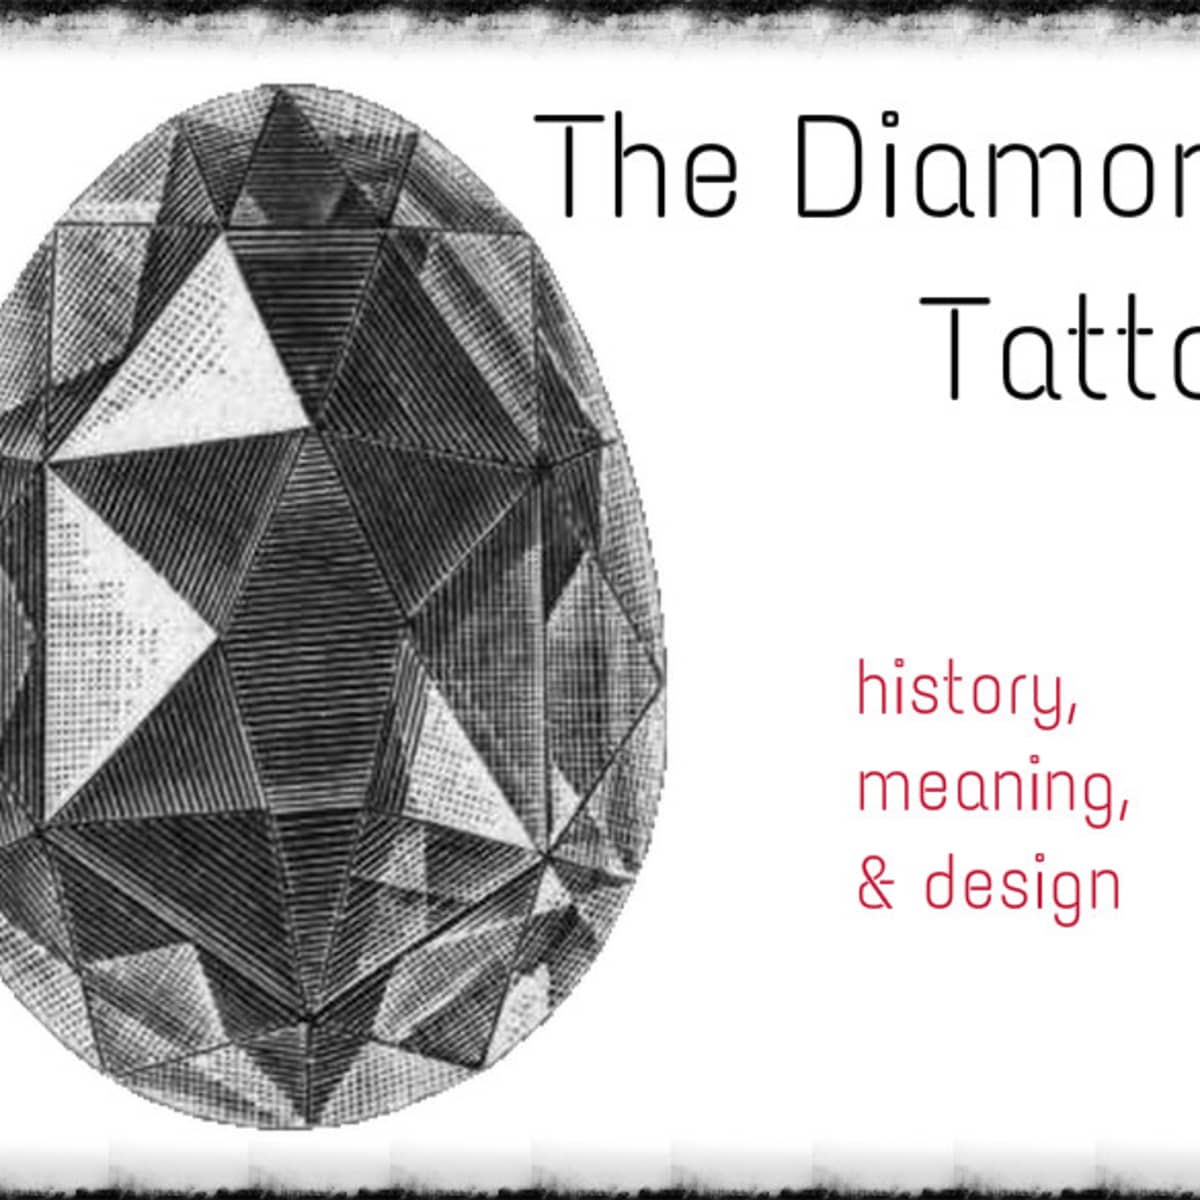 diamond tattoo designs for men